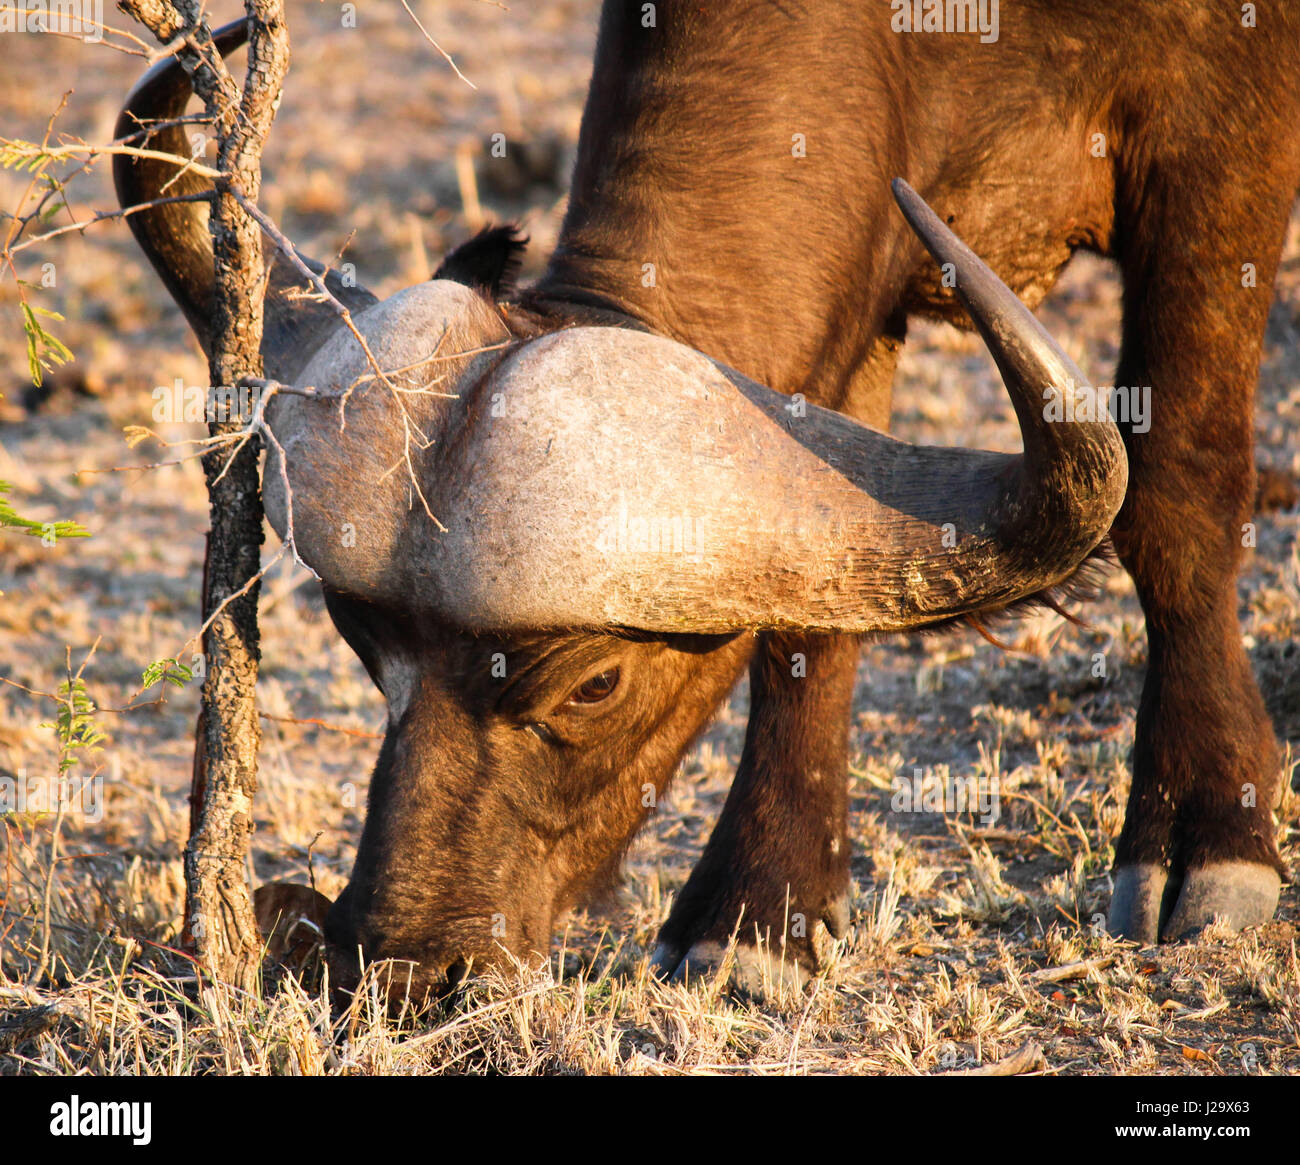 Buffalo grazing arid climate Stock Photo